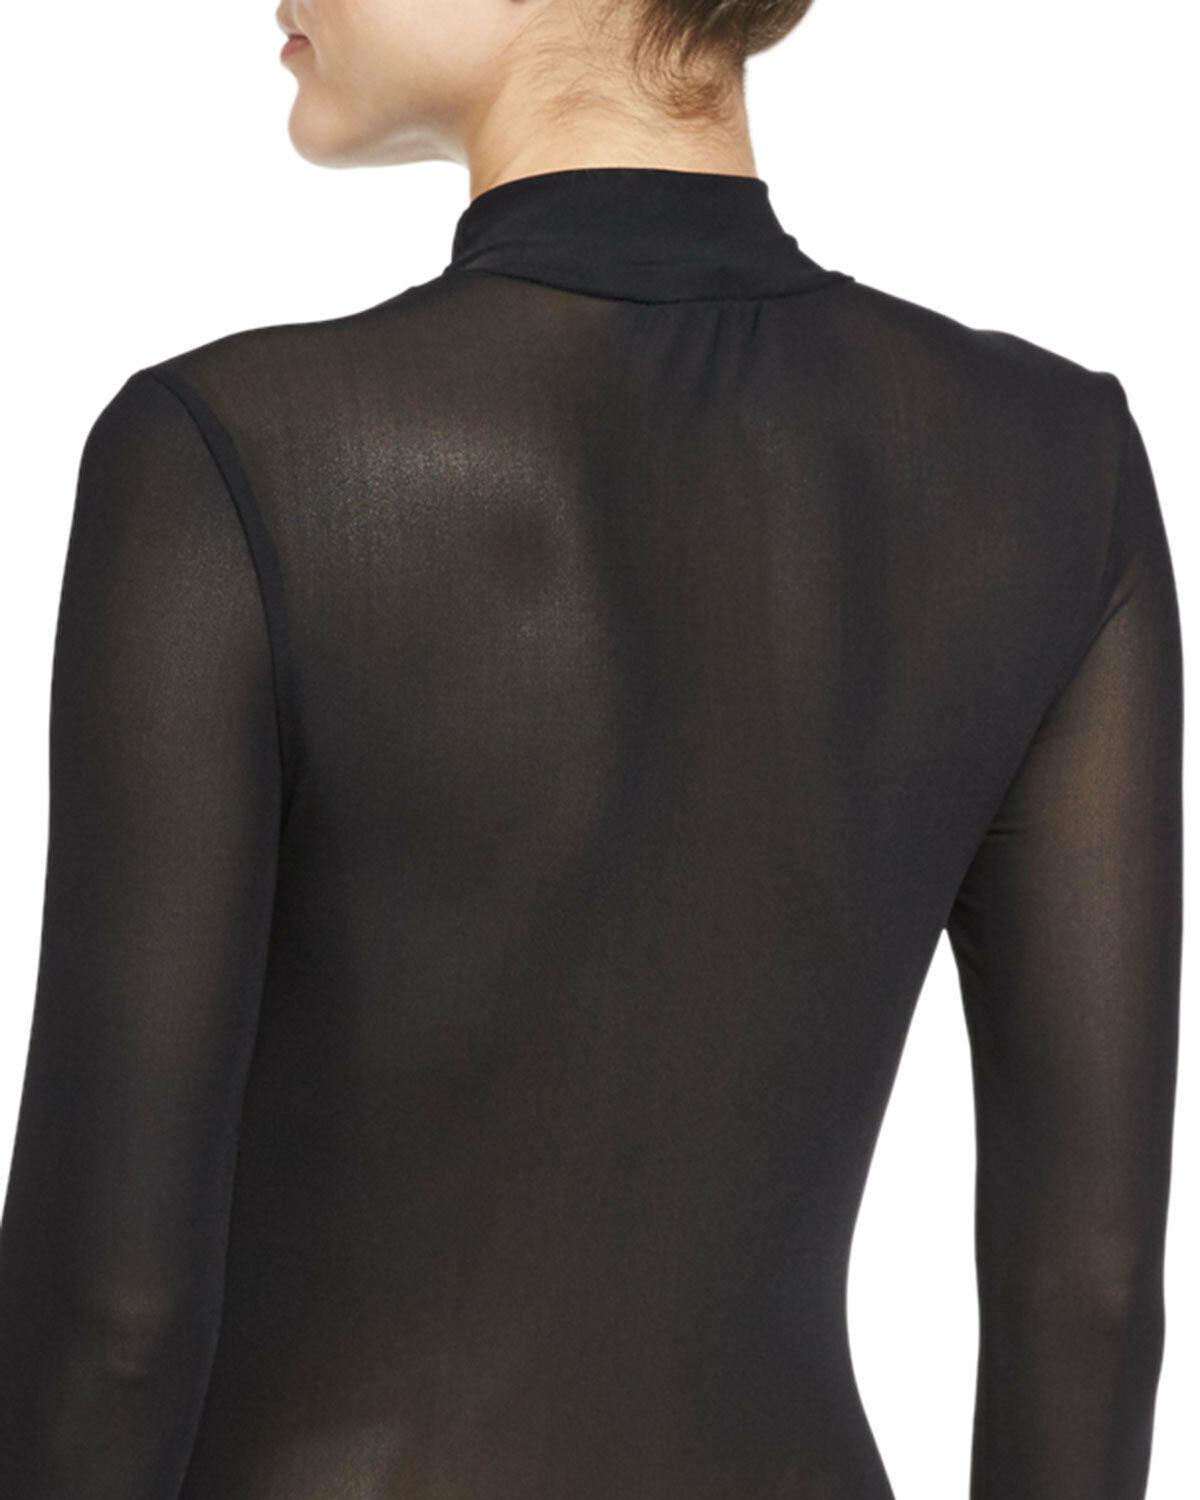 Romeo & Juliet Couture Long-Sleeve Mesh Bodysuit, Black Size M - SVNYFancy